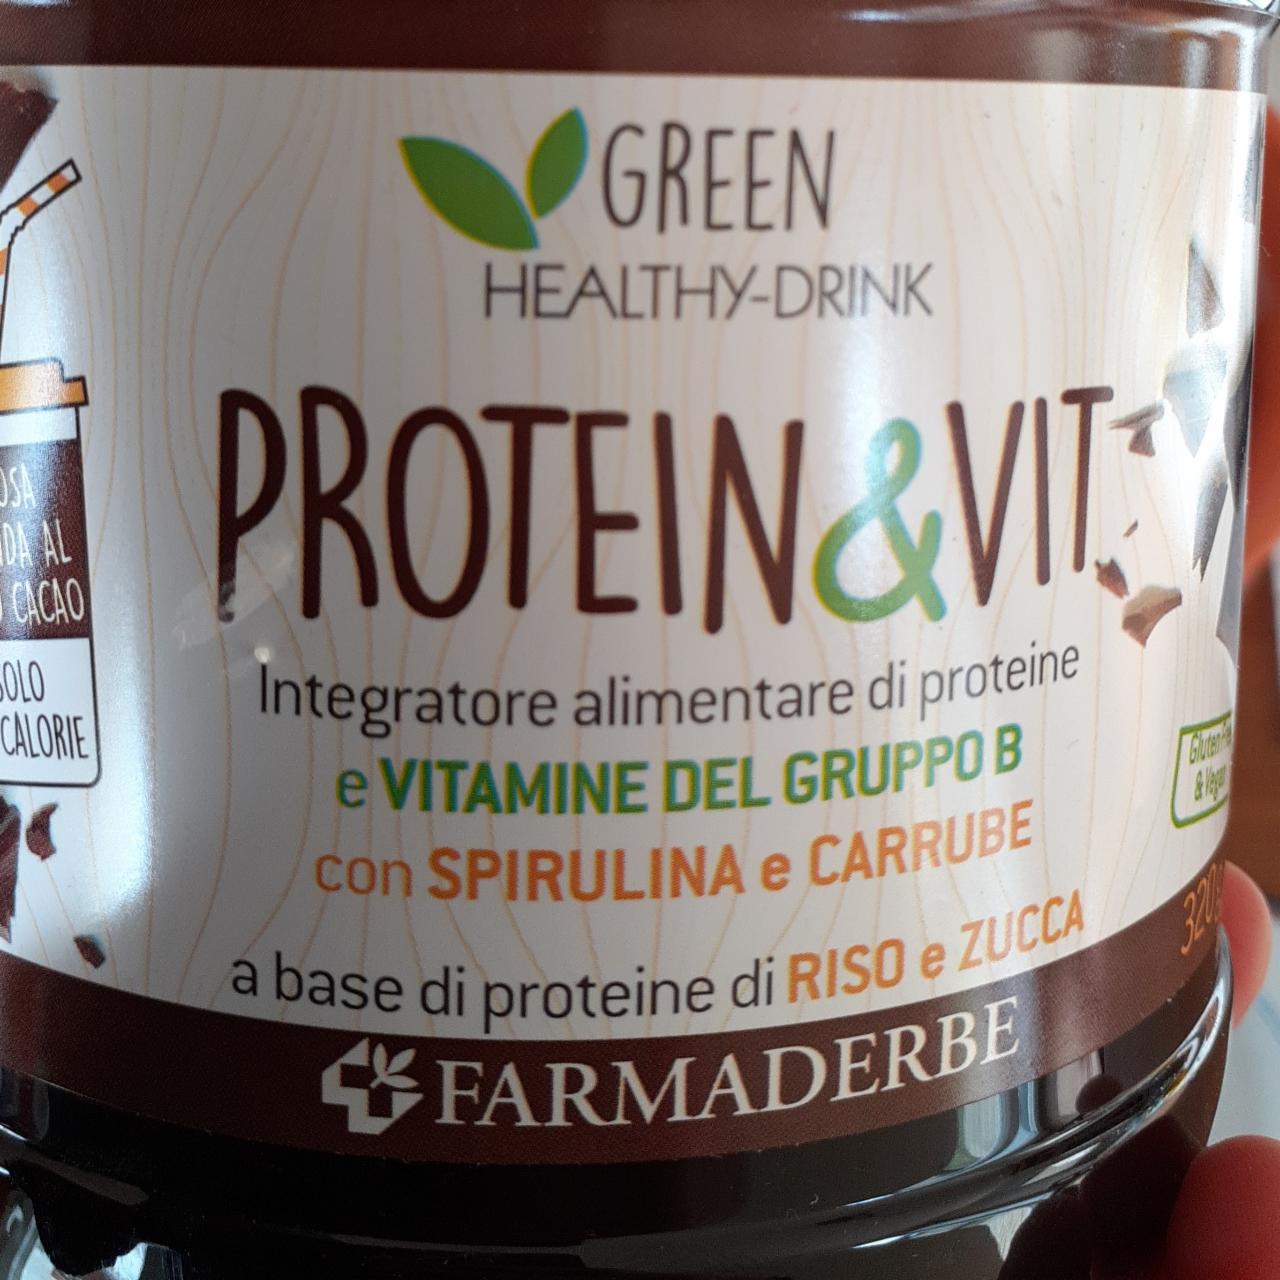 Fotografie - Green healthy-drink protein & vit Farmaderbe